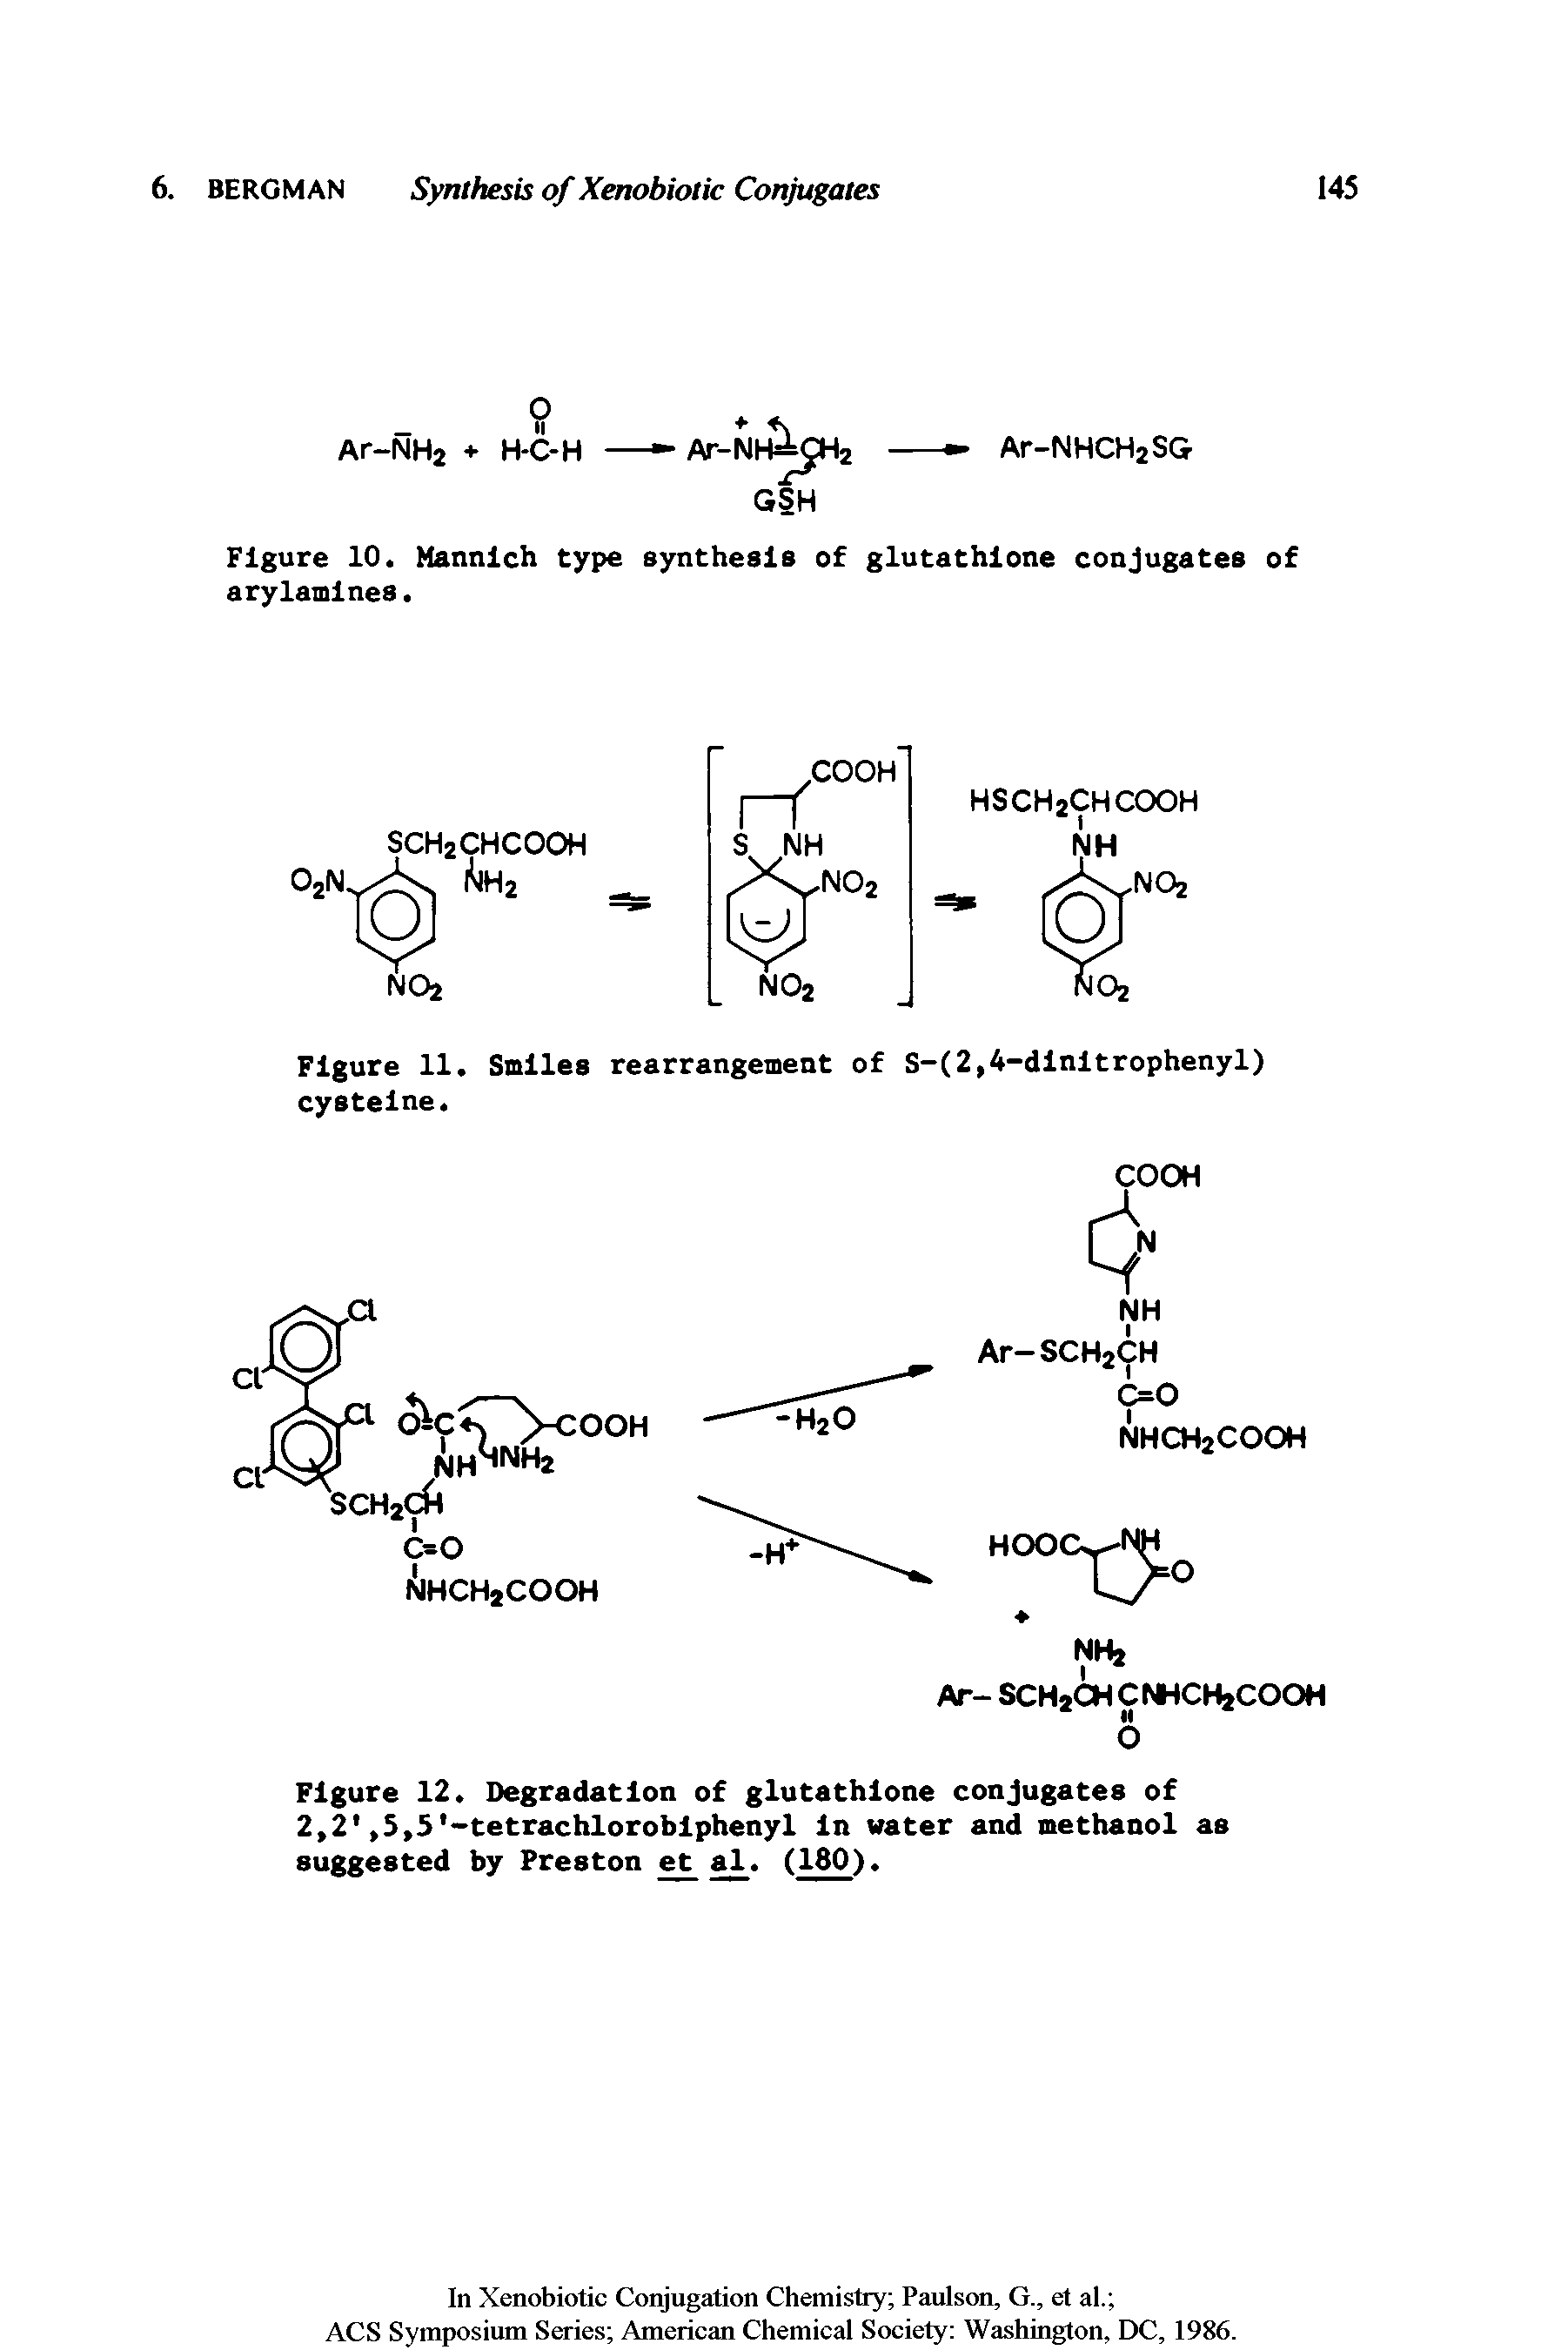 Figure 10. Mannich type synthesis of glutathione conjugates of arylamlnes.